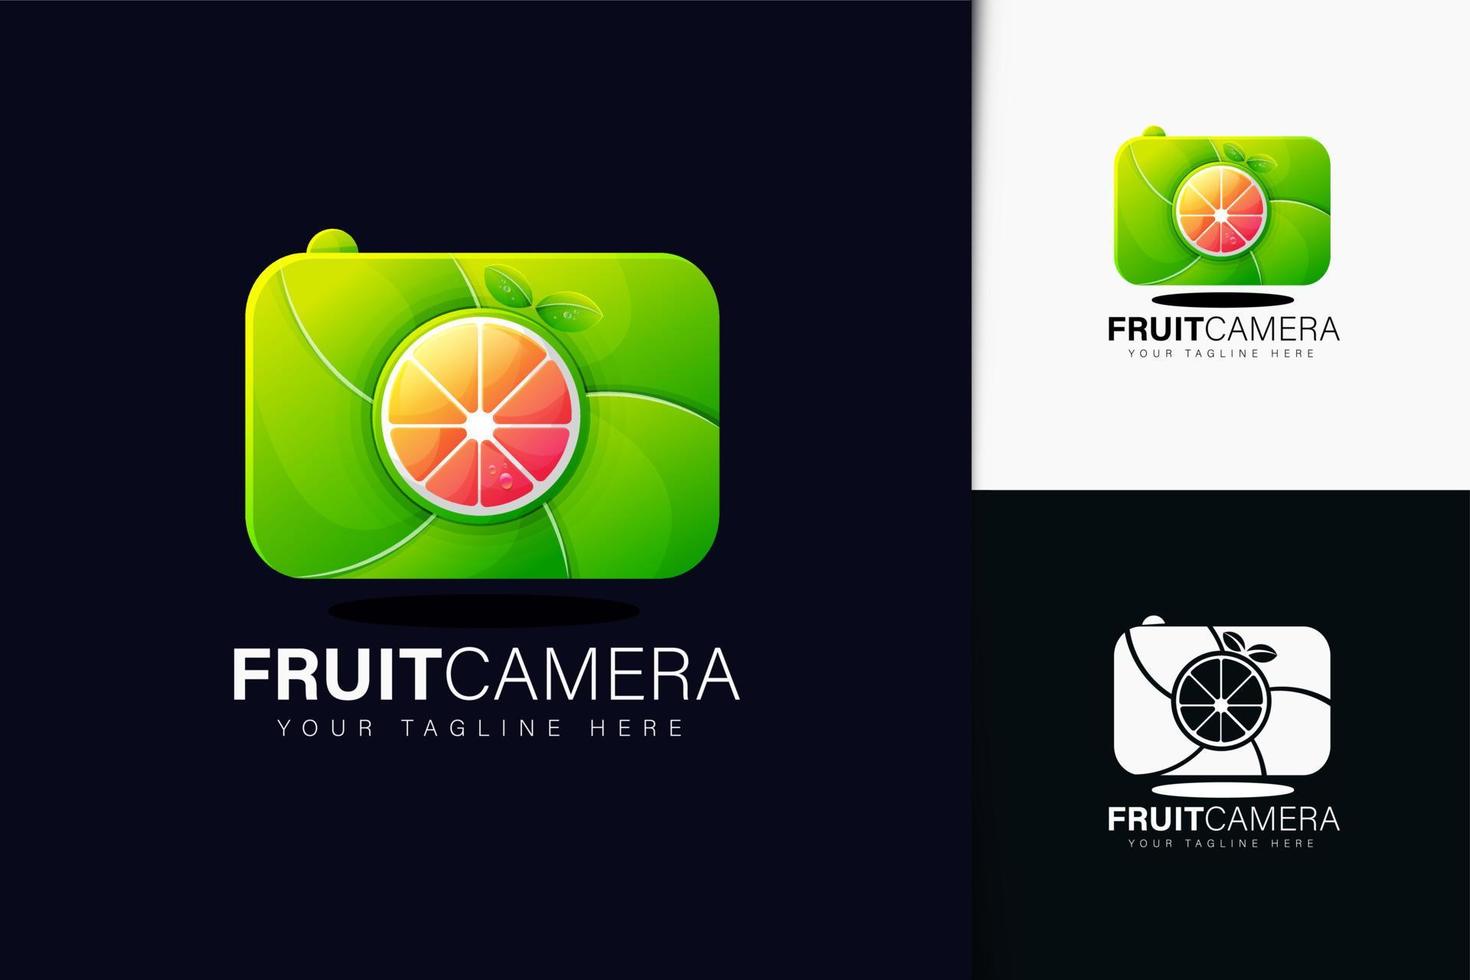 Fruit camera logo design with gradient vector